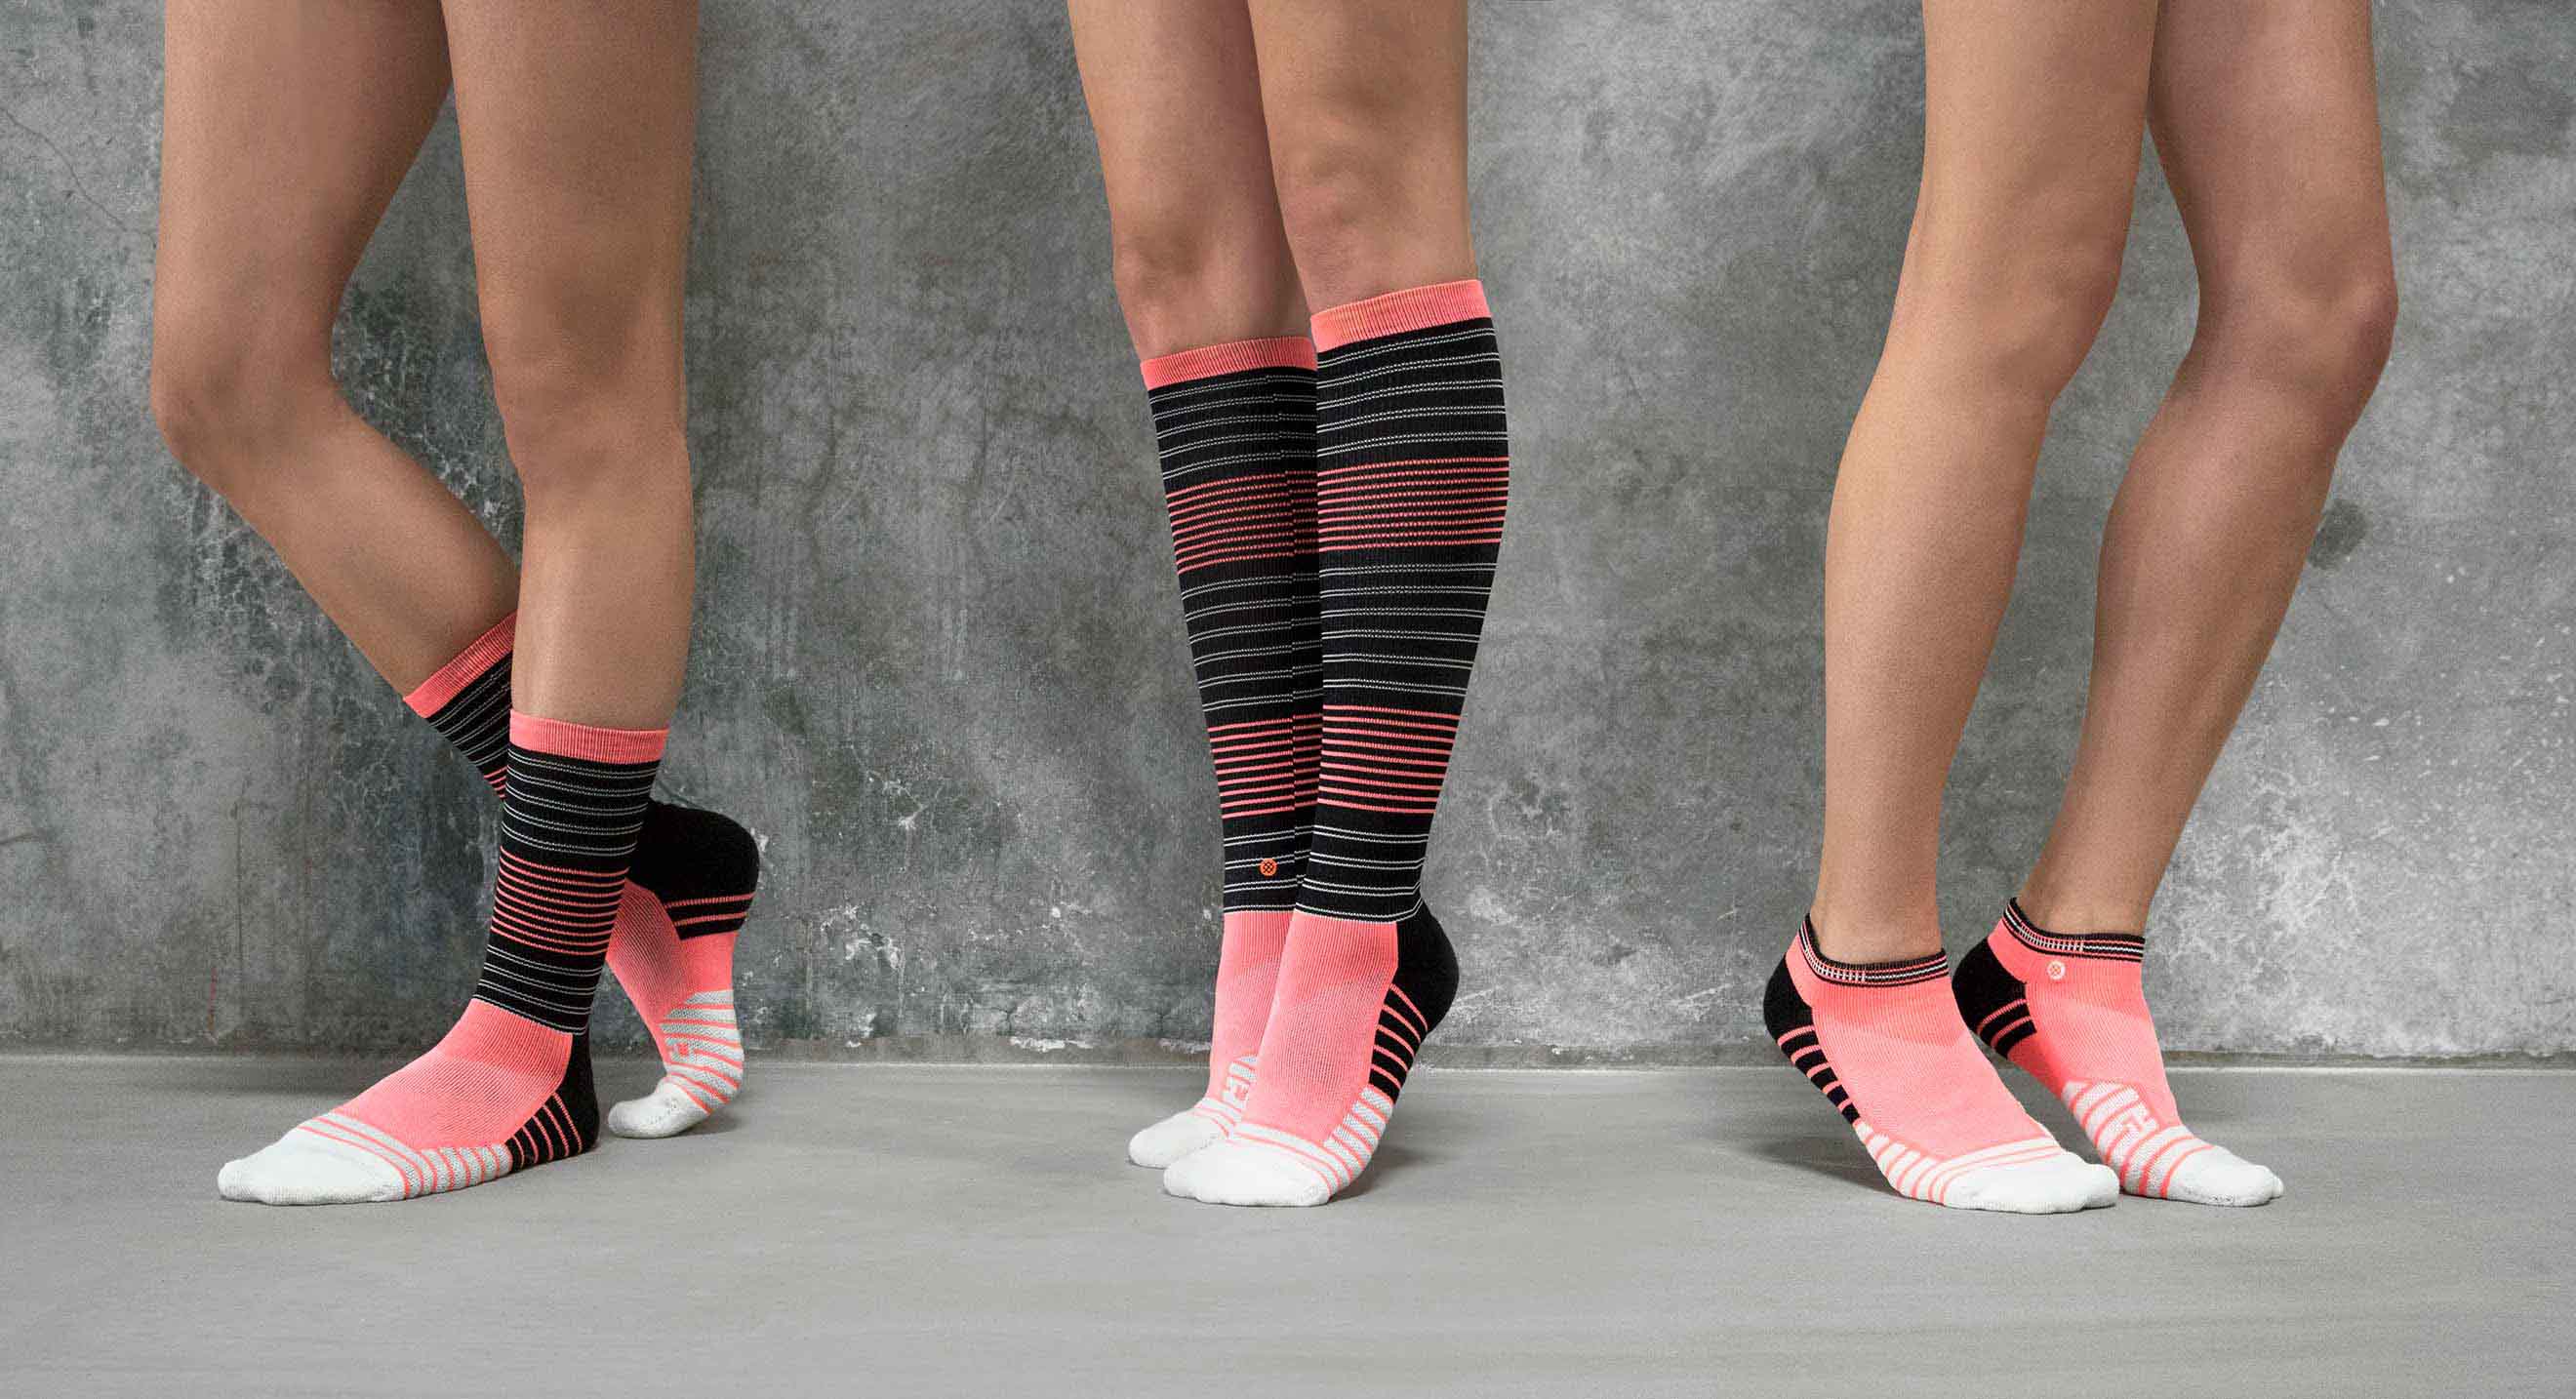 Feather Yarn Antibacterial Ankle High Socks: Fresh & Comfortable